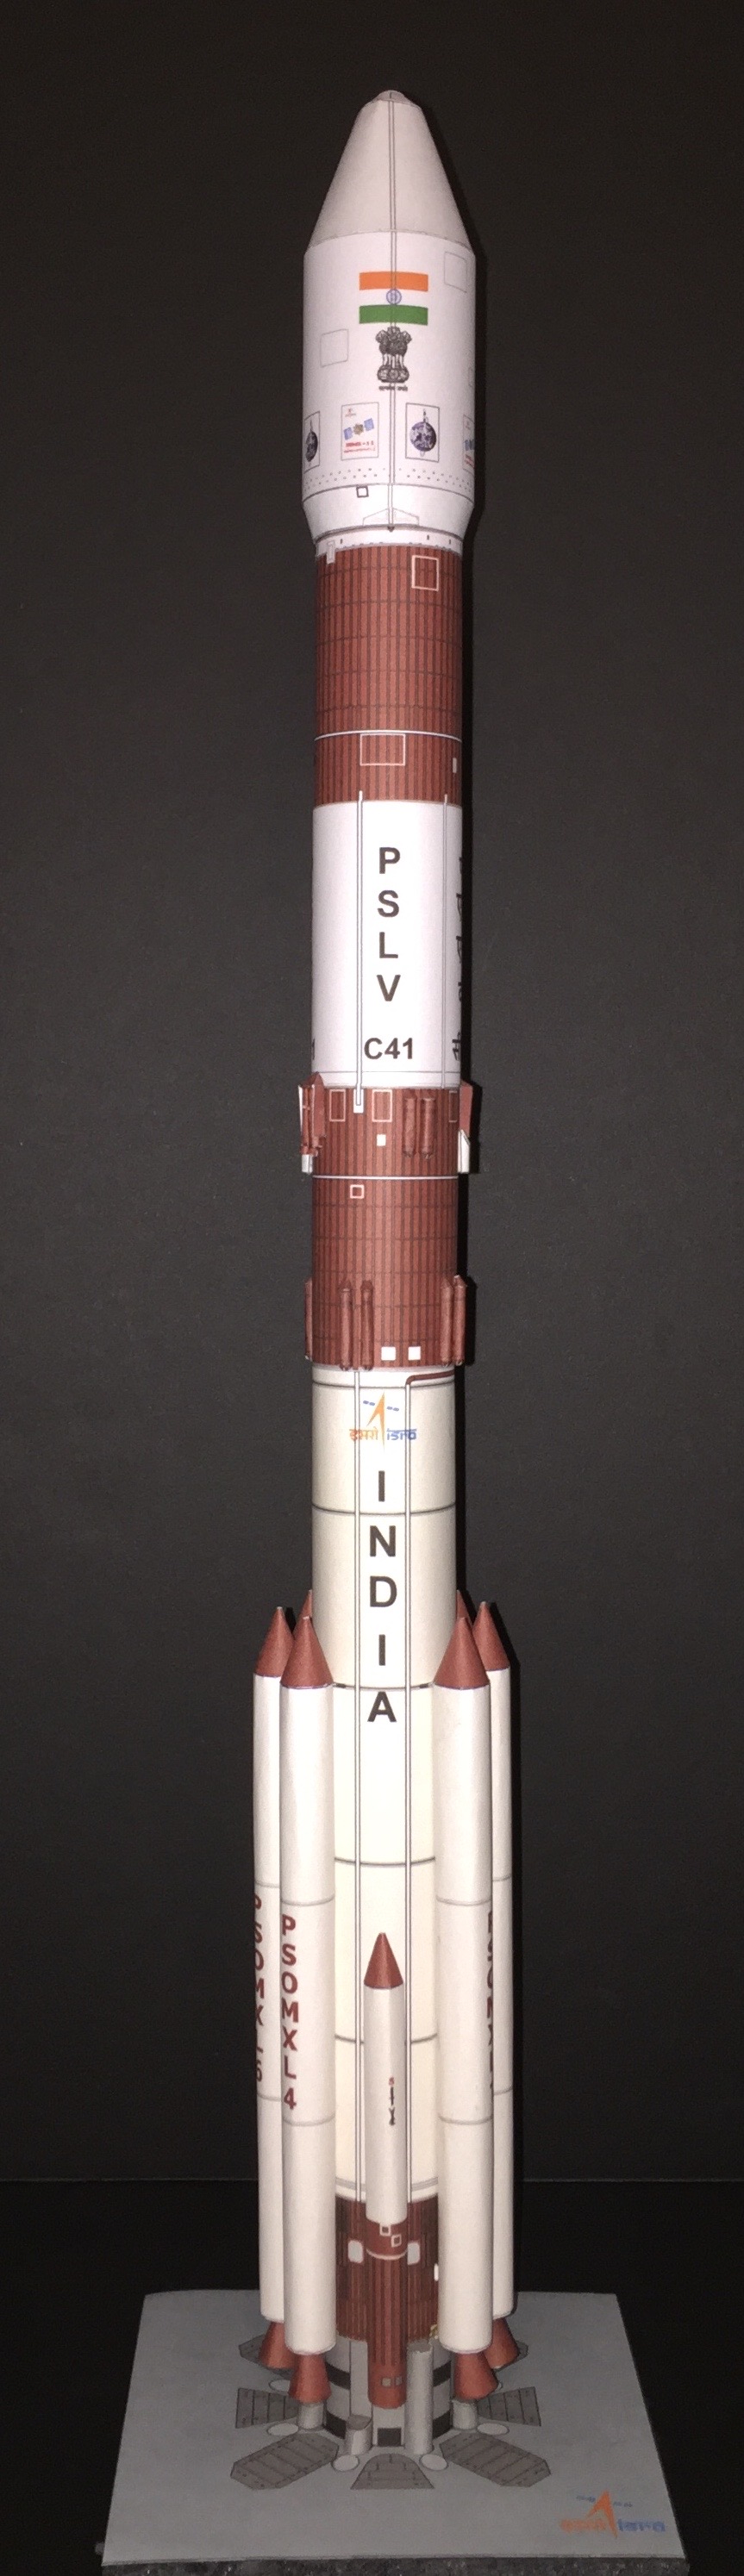 PSLV C41-image